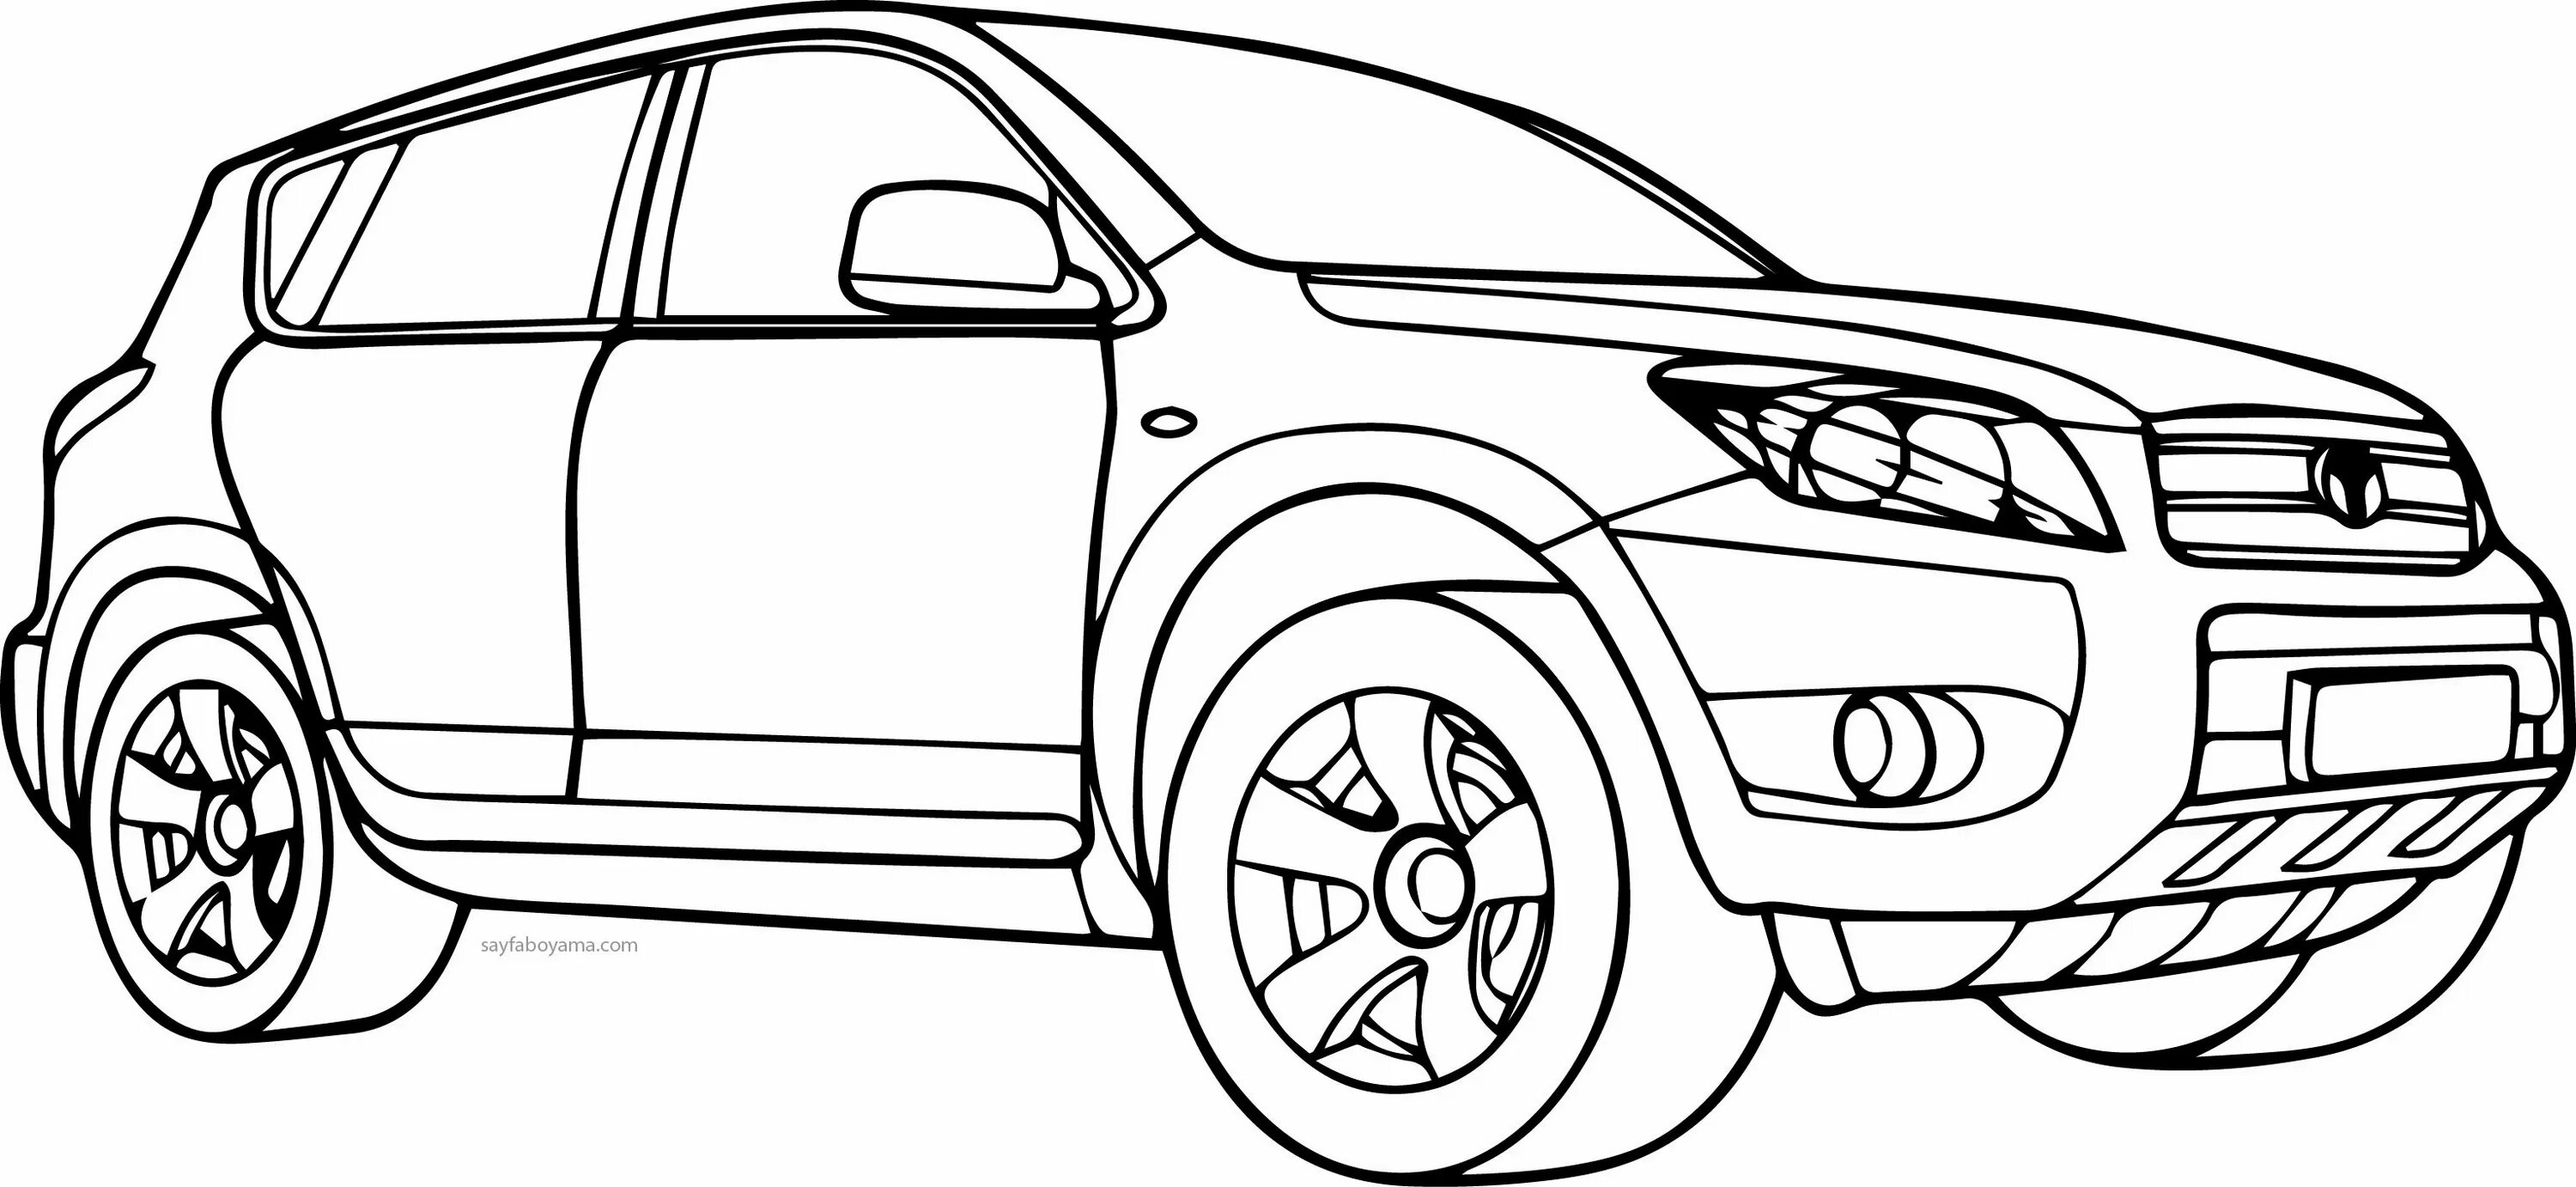 Раскраска Toyota rav4. Ниссан Мурано раскраска. Раскраска Ниссан Кашкай 2008. Раскраска Лексус LX 570. Рисунок рав